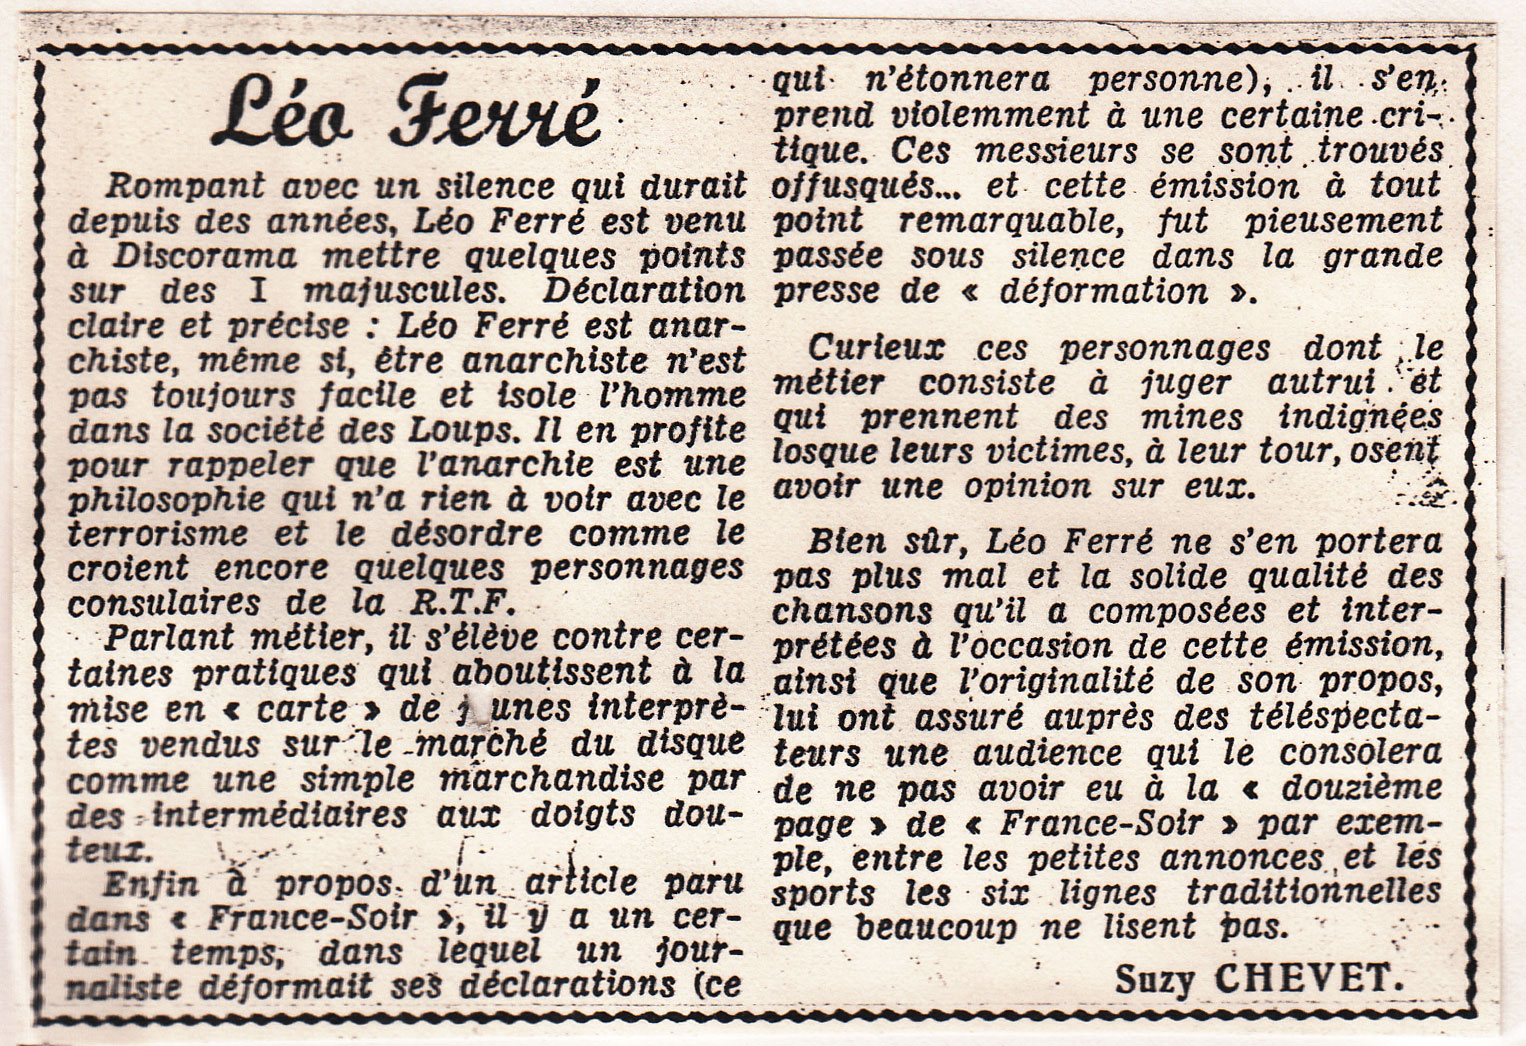 Léo Ferré - Le Monde Libertaire de mai 1965